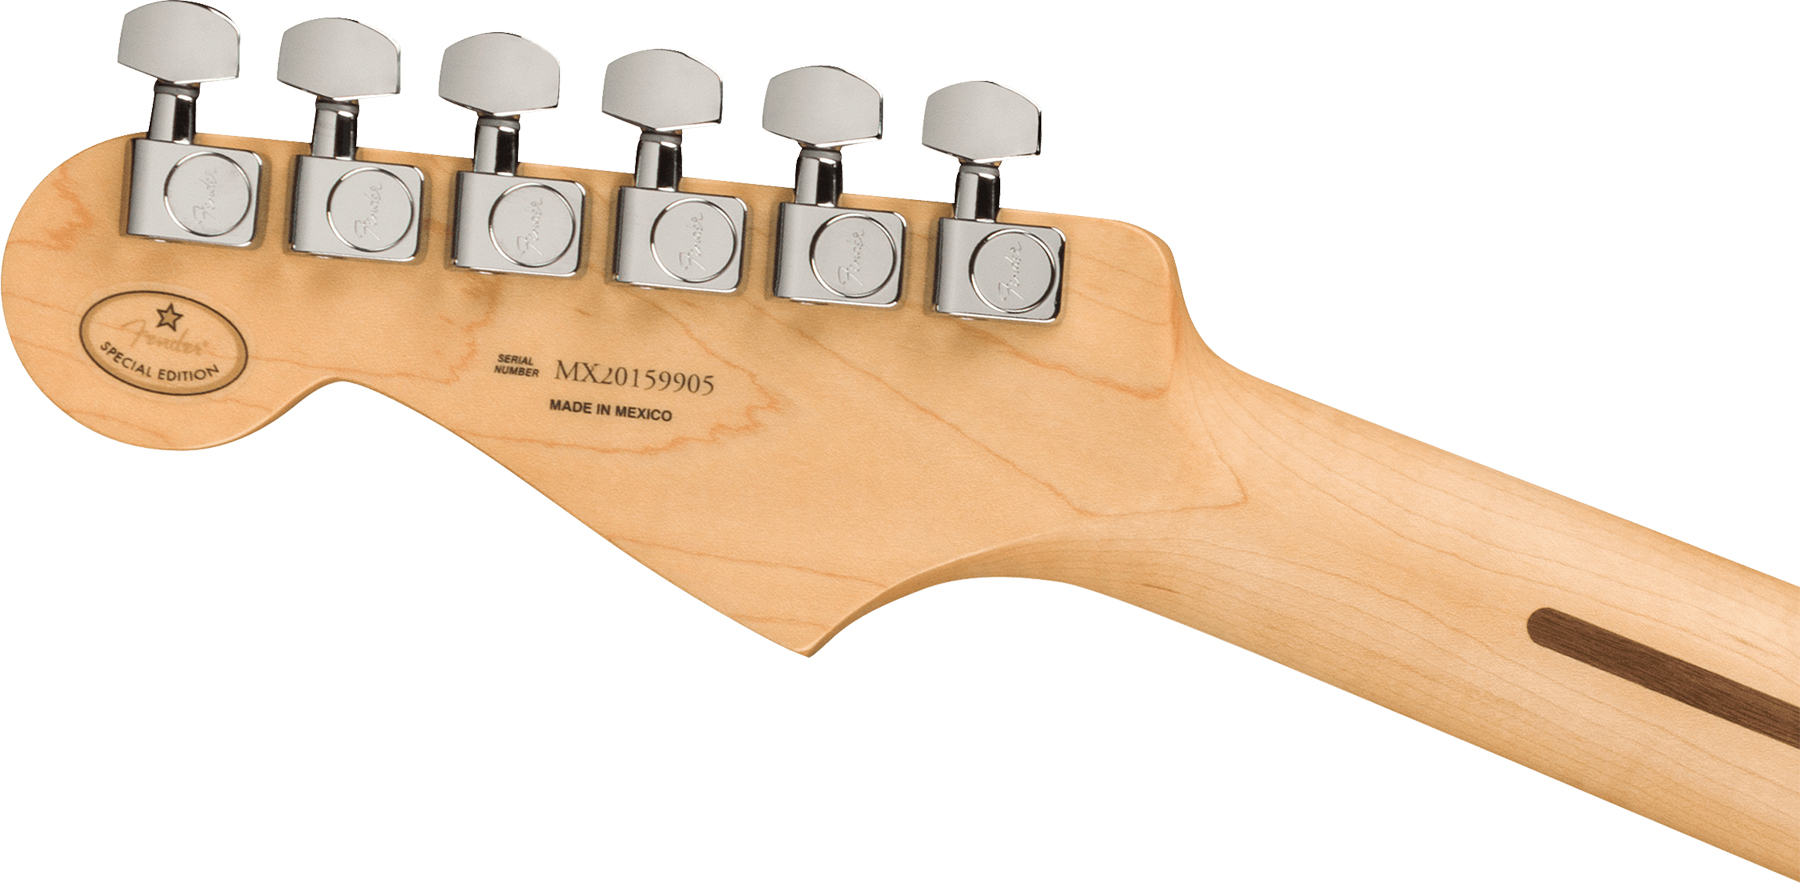 Fender Strat Player Ltd Mex 3s Trem Mn - Pacific Peach - E-Gitarre in Str-Form - Variation 3